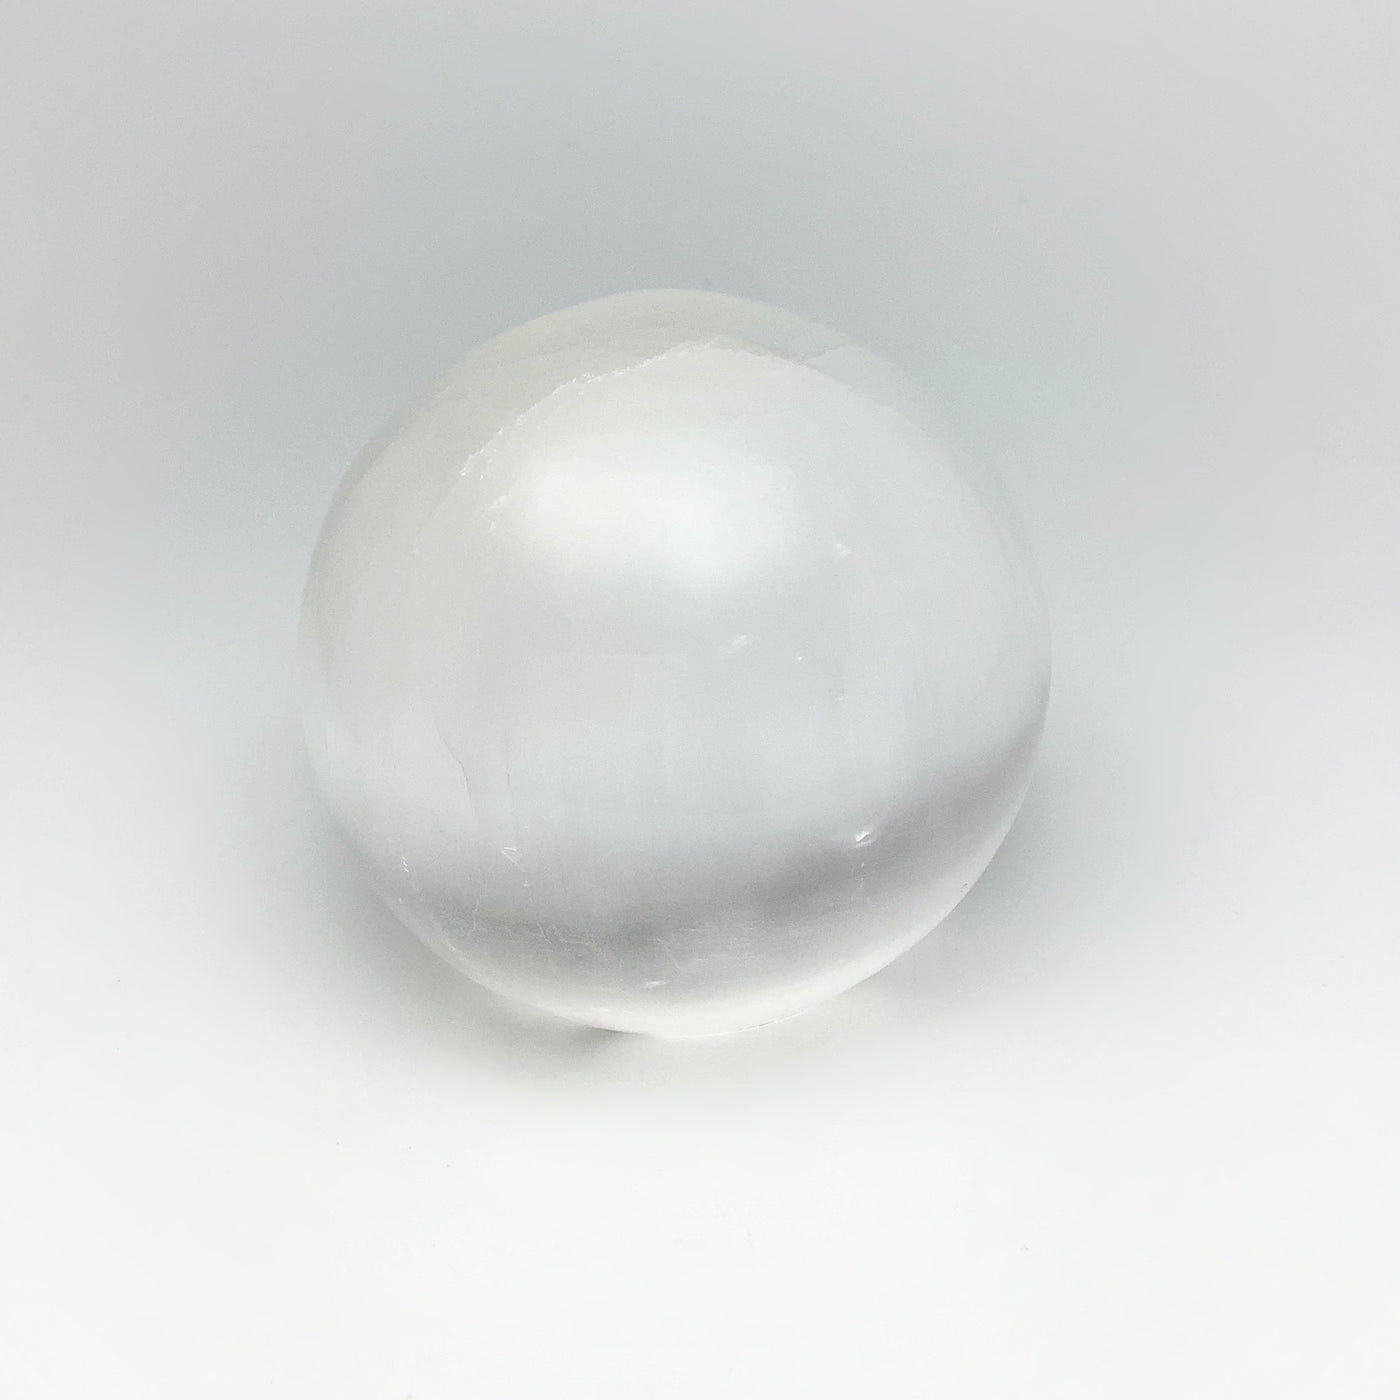 Selenite Sphere with Cut Base